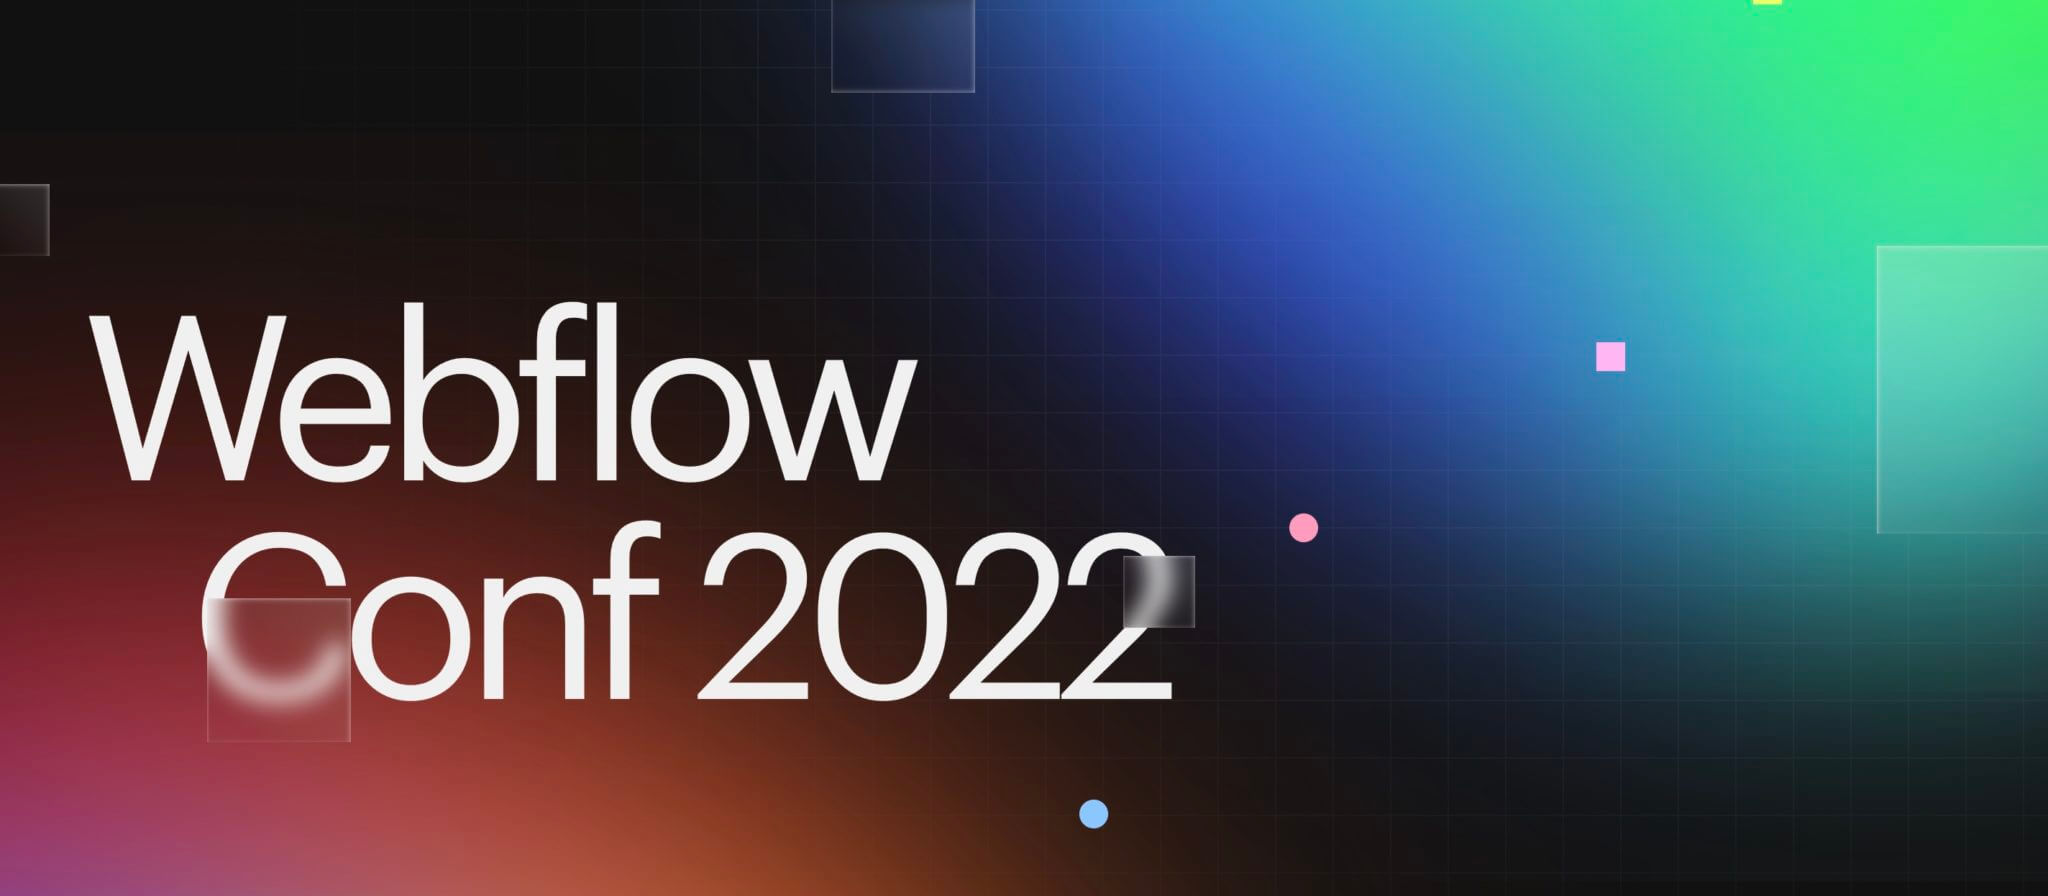 Webflow Conf 2022